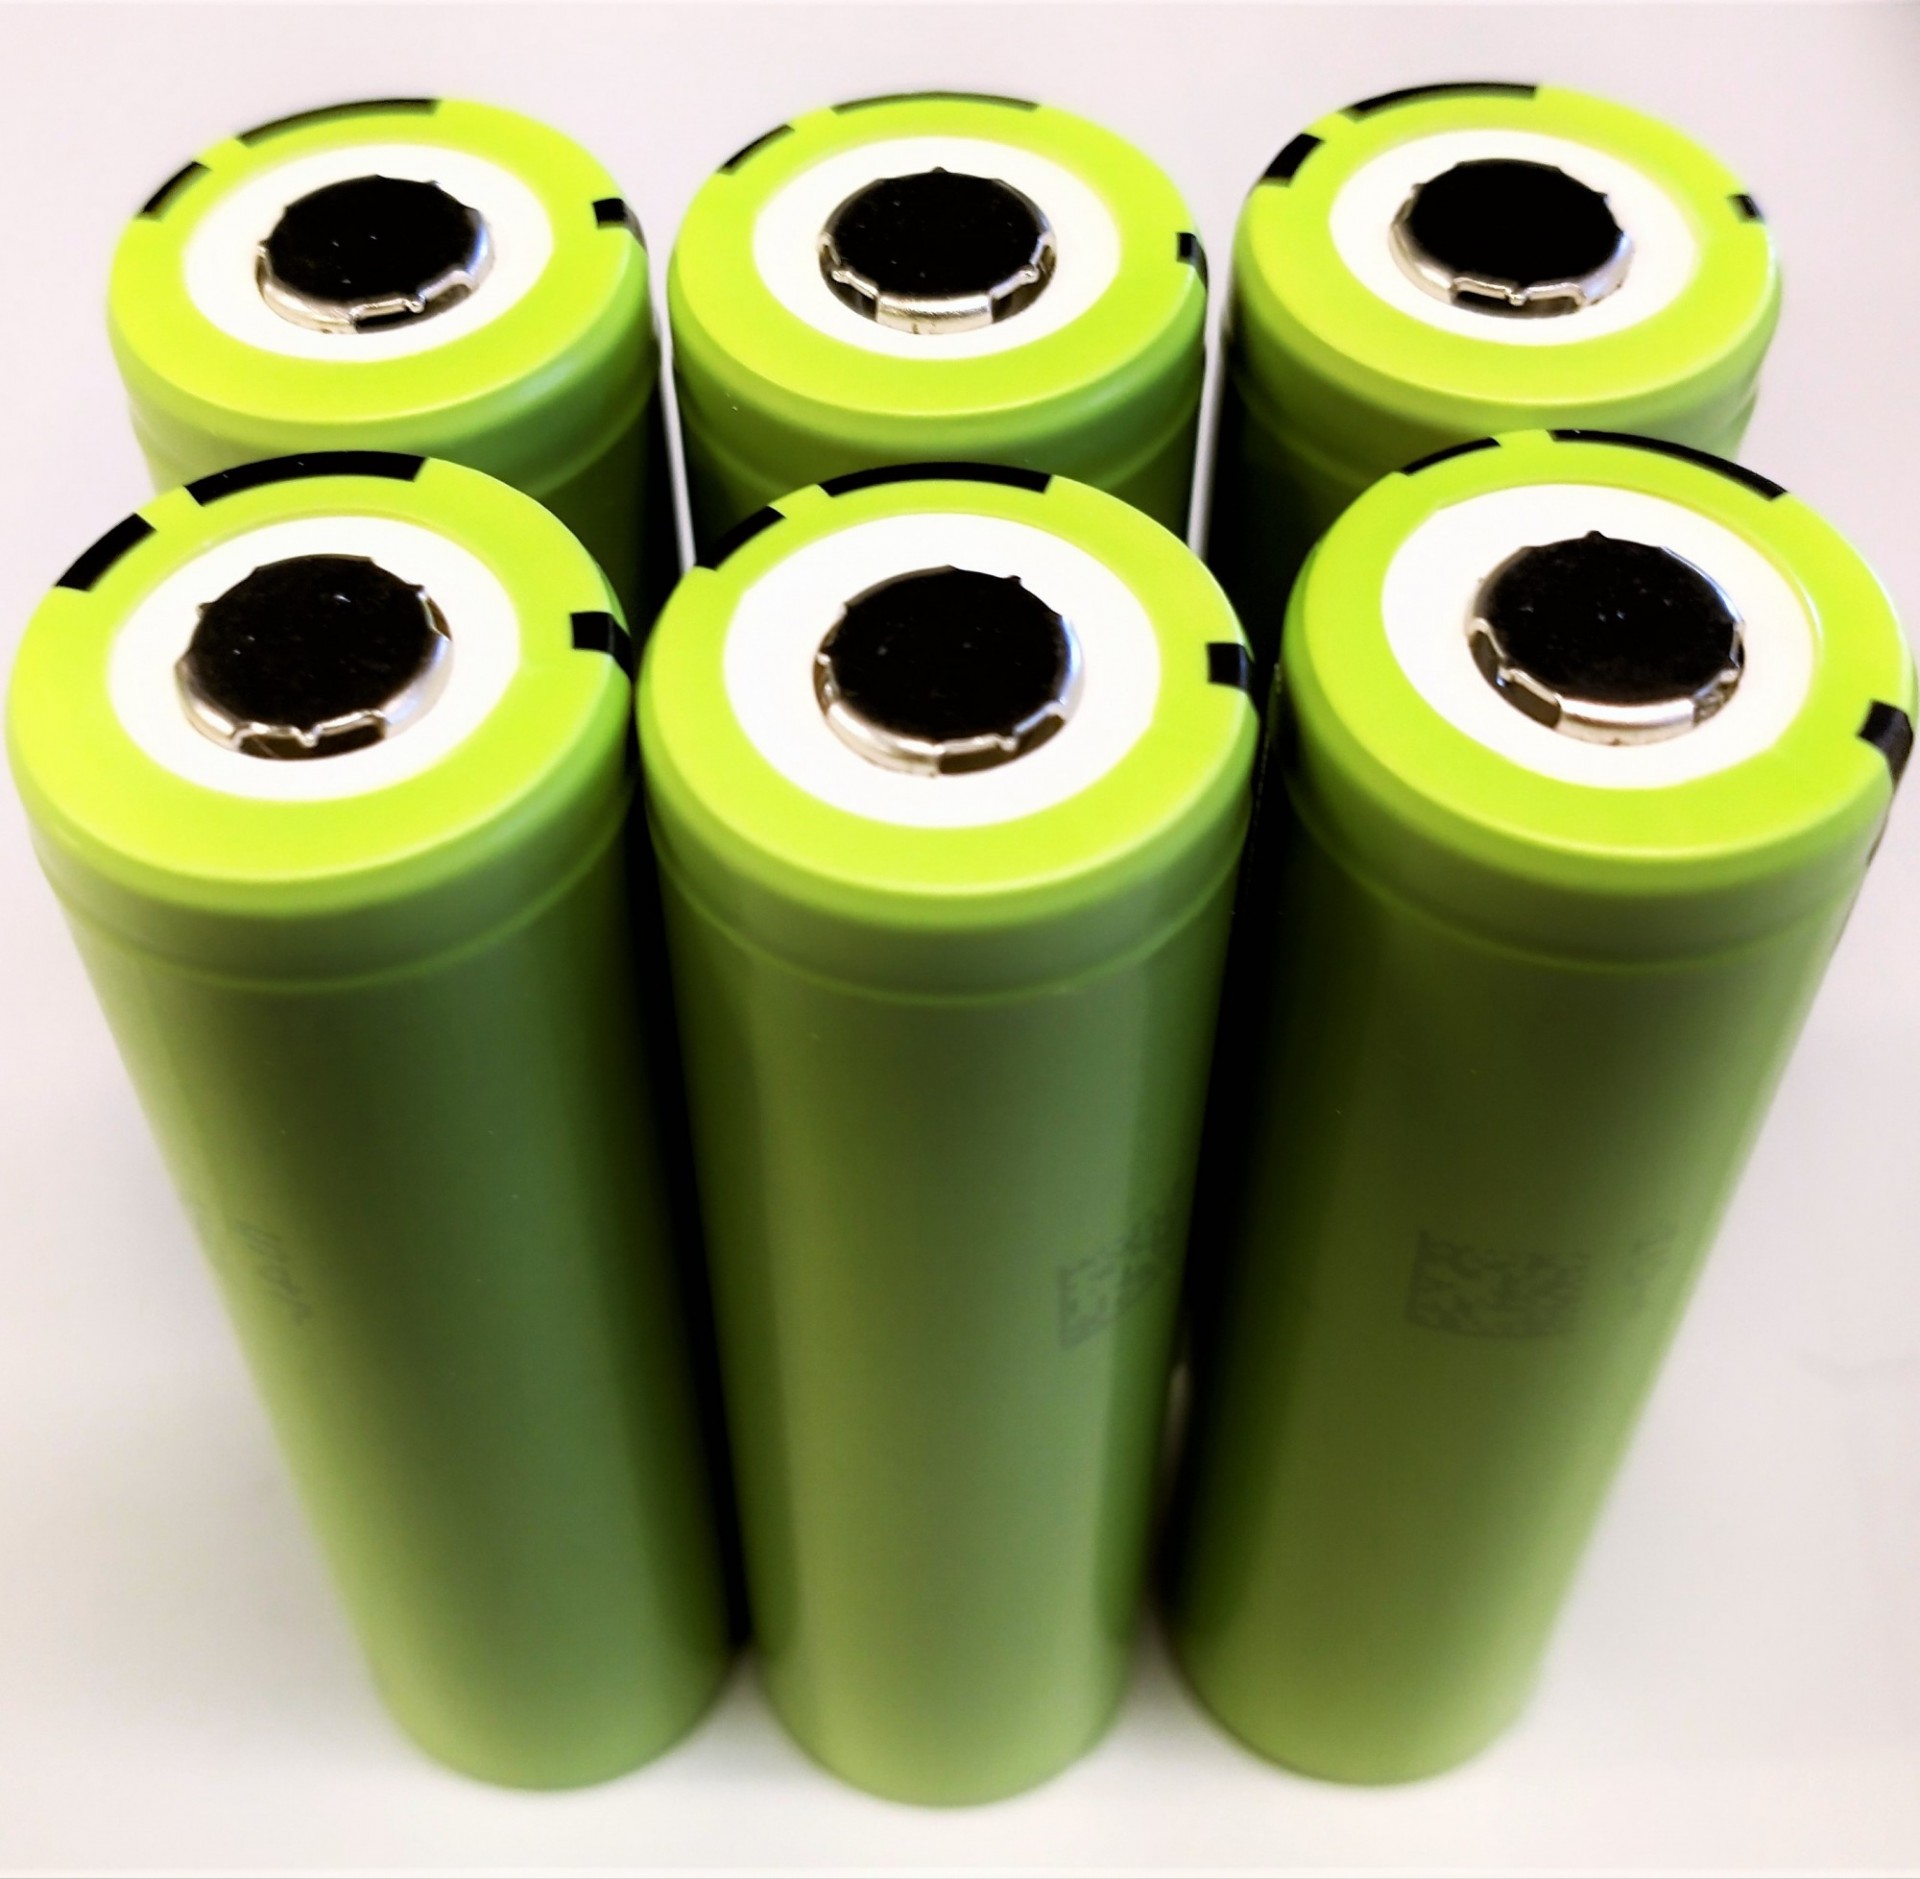 battery cells